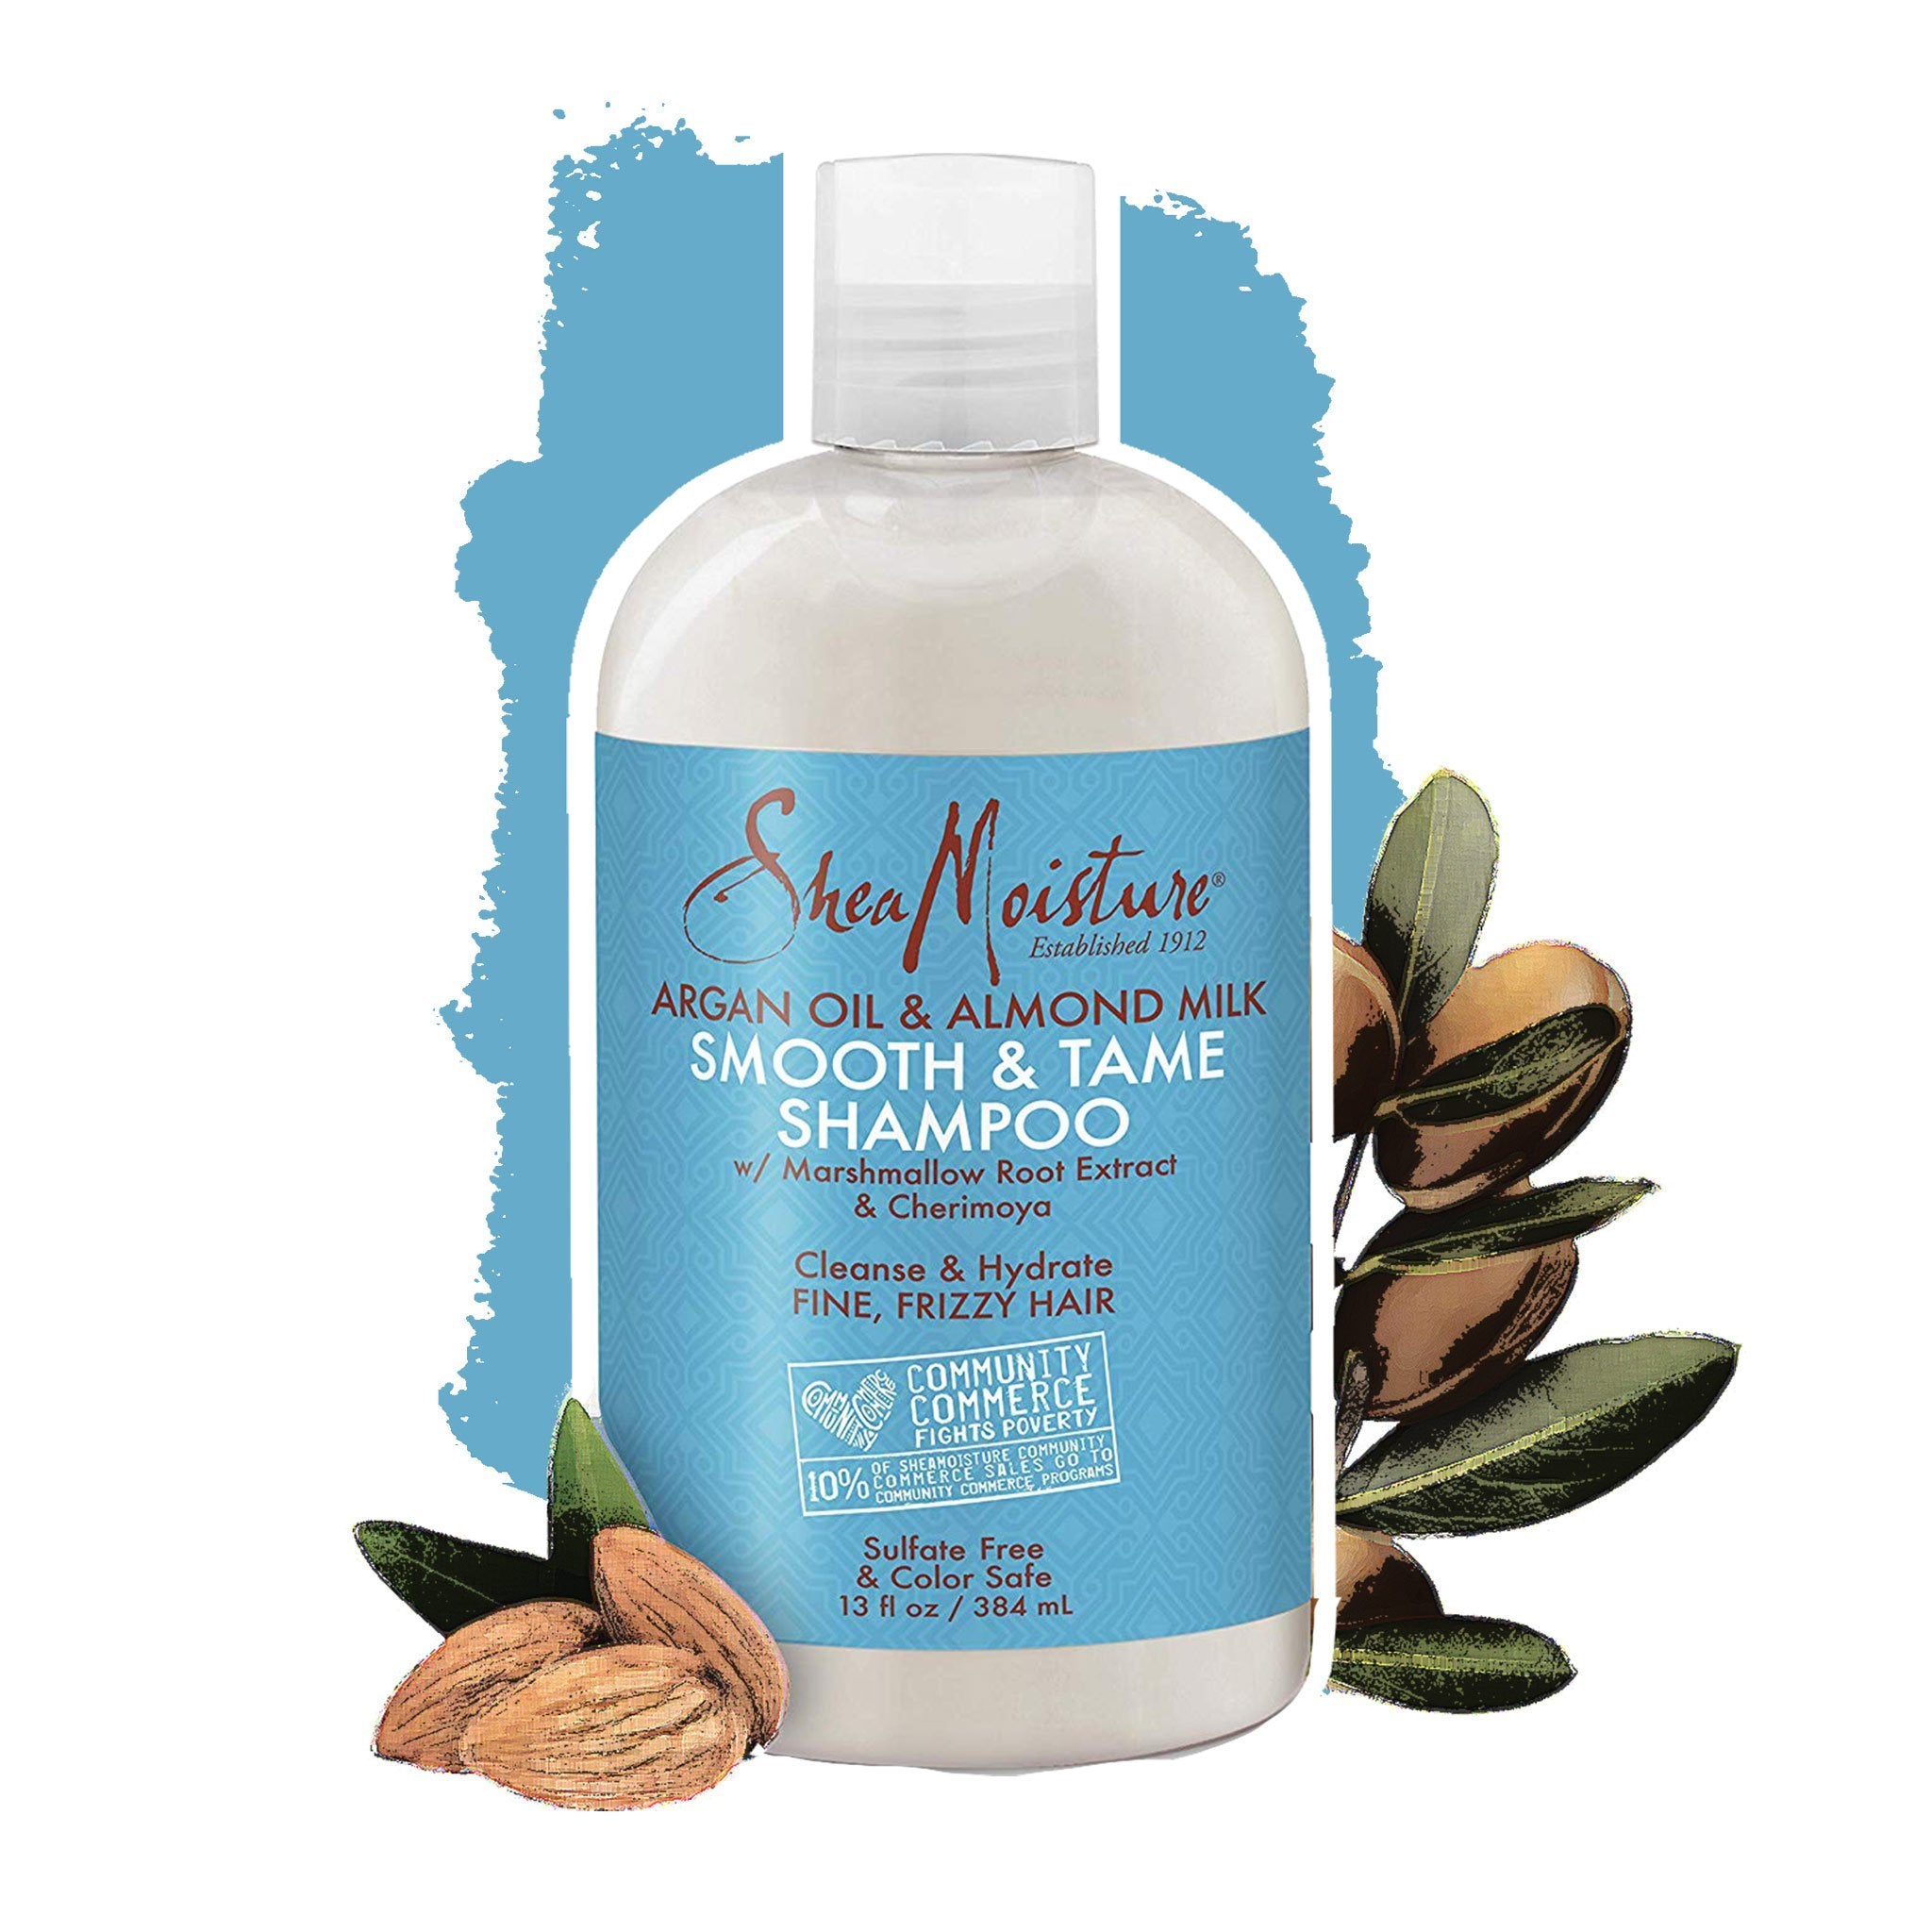 lockenkopf-sheamoisture-argan-oil-almond-milk-smooth-tame-shampoo.jpg